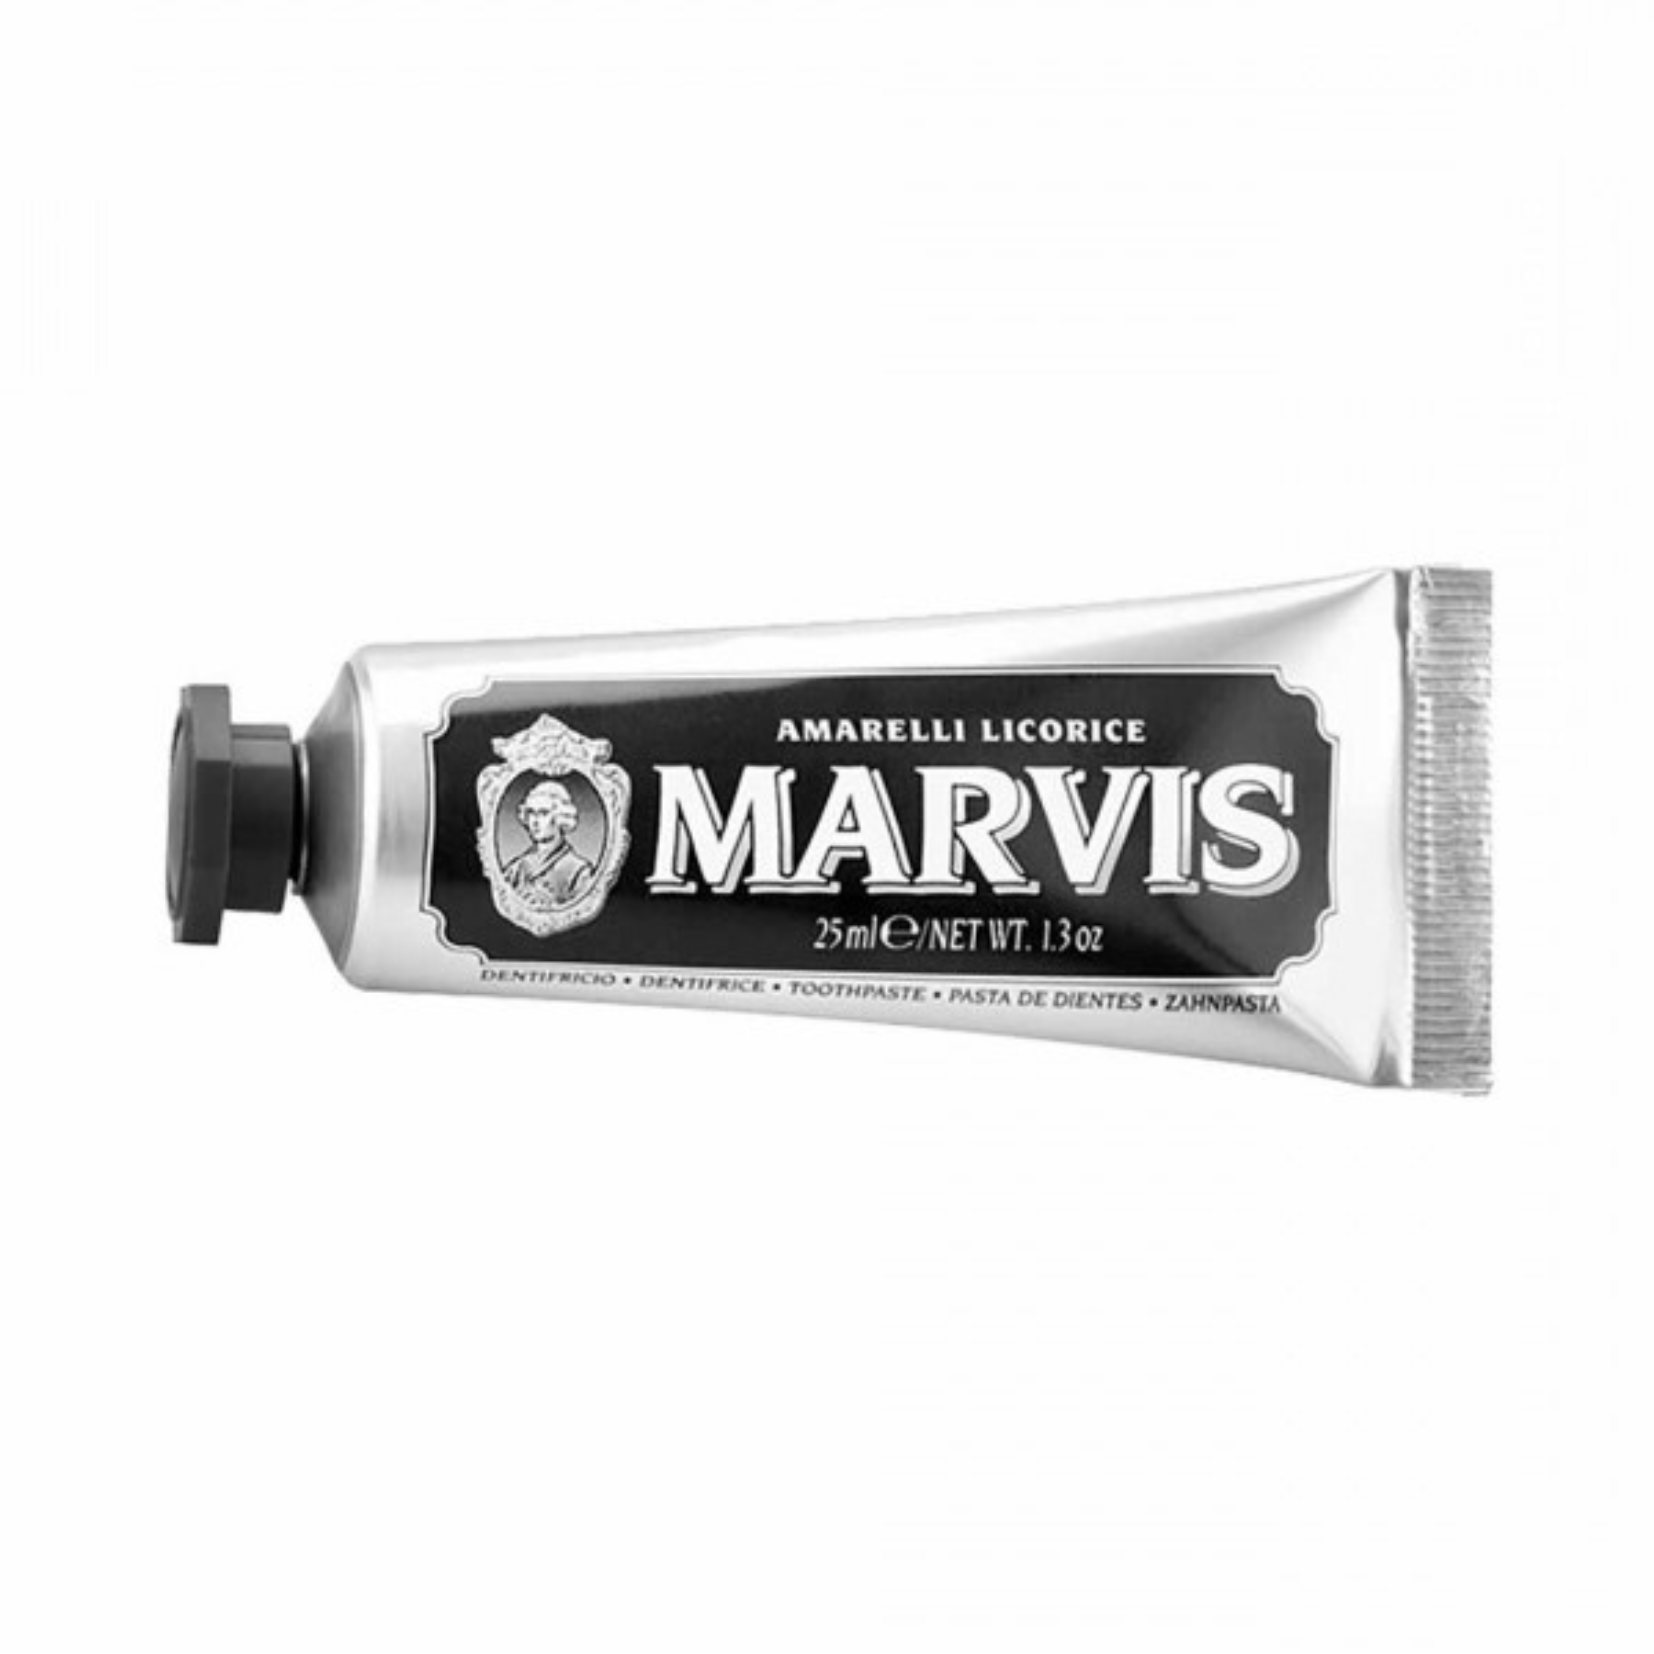 MARVIS - Dentifrice - Amarelli Licorice